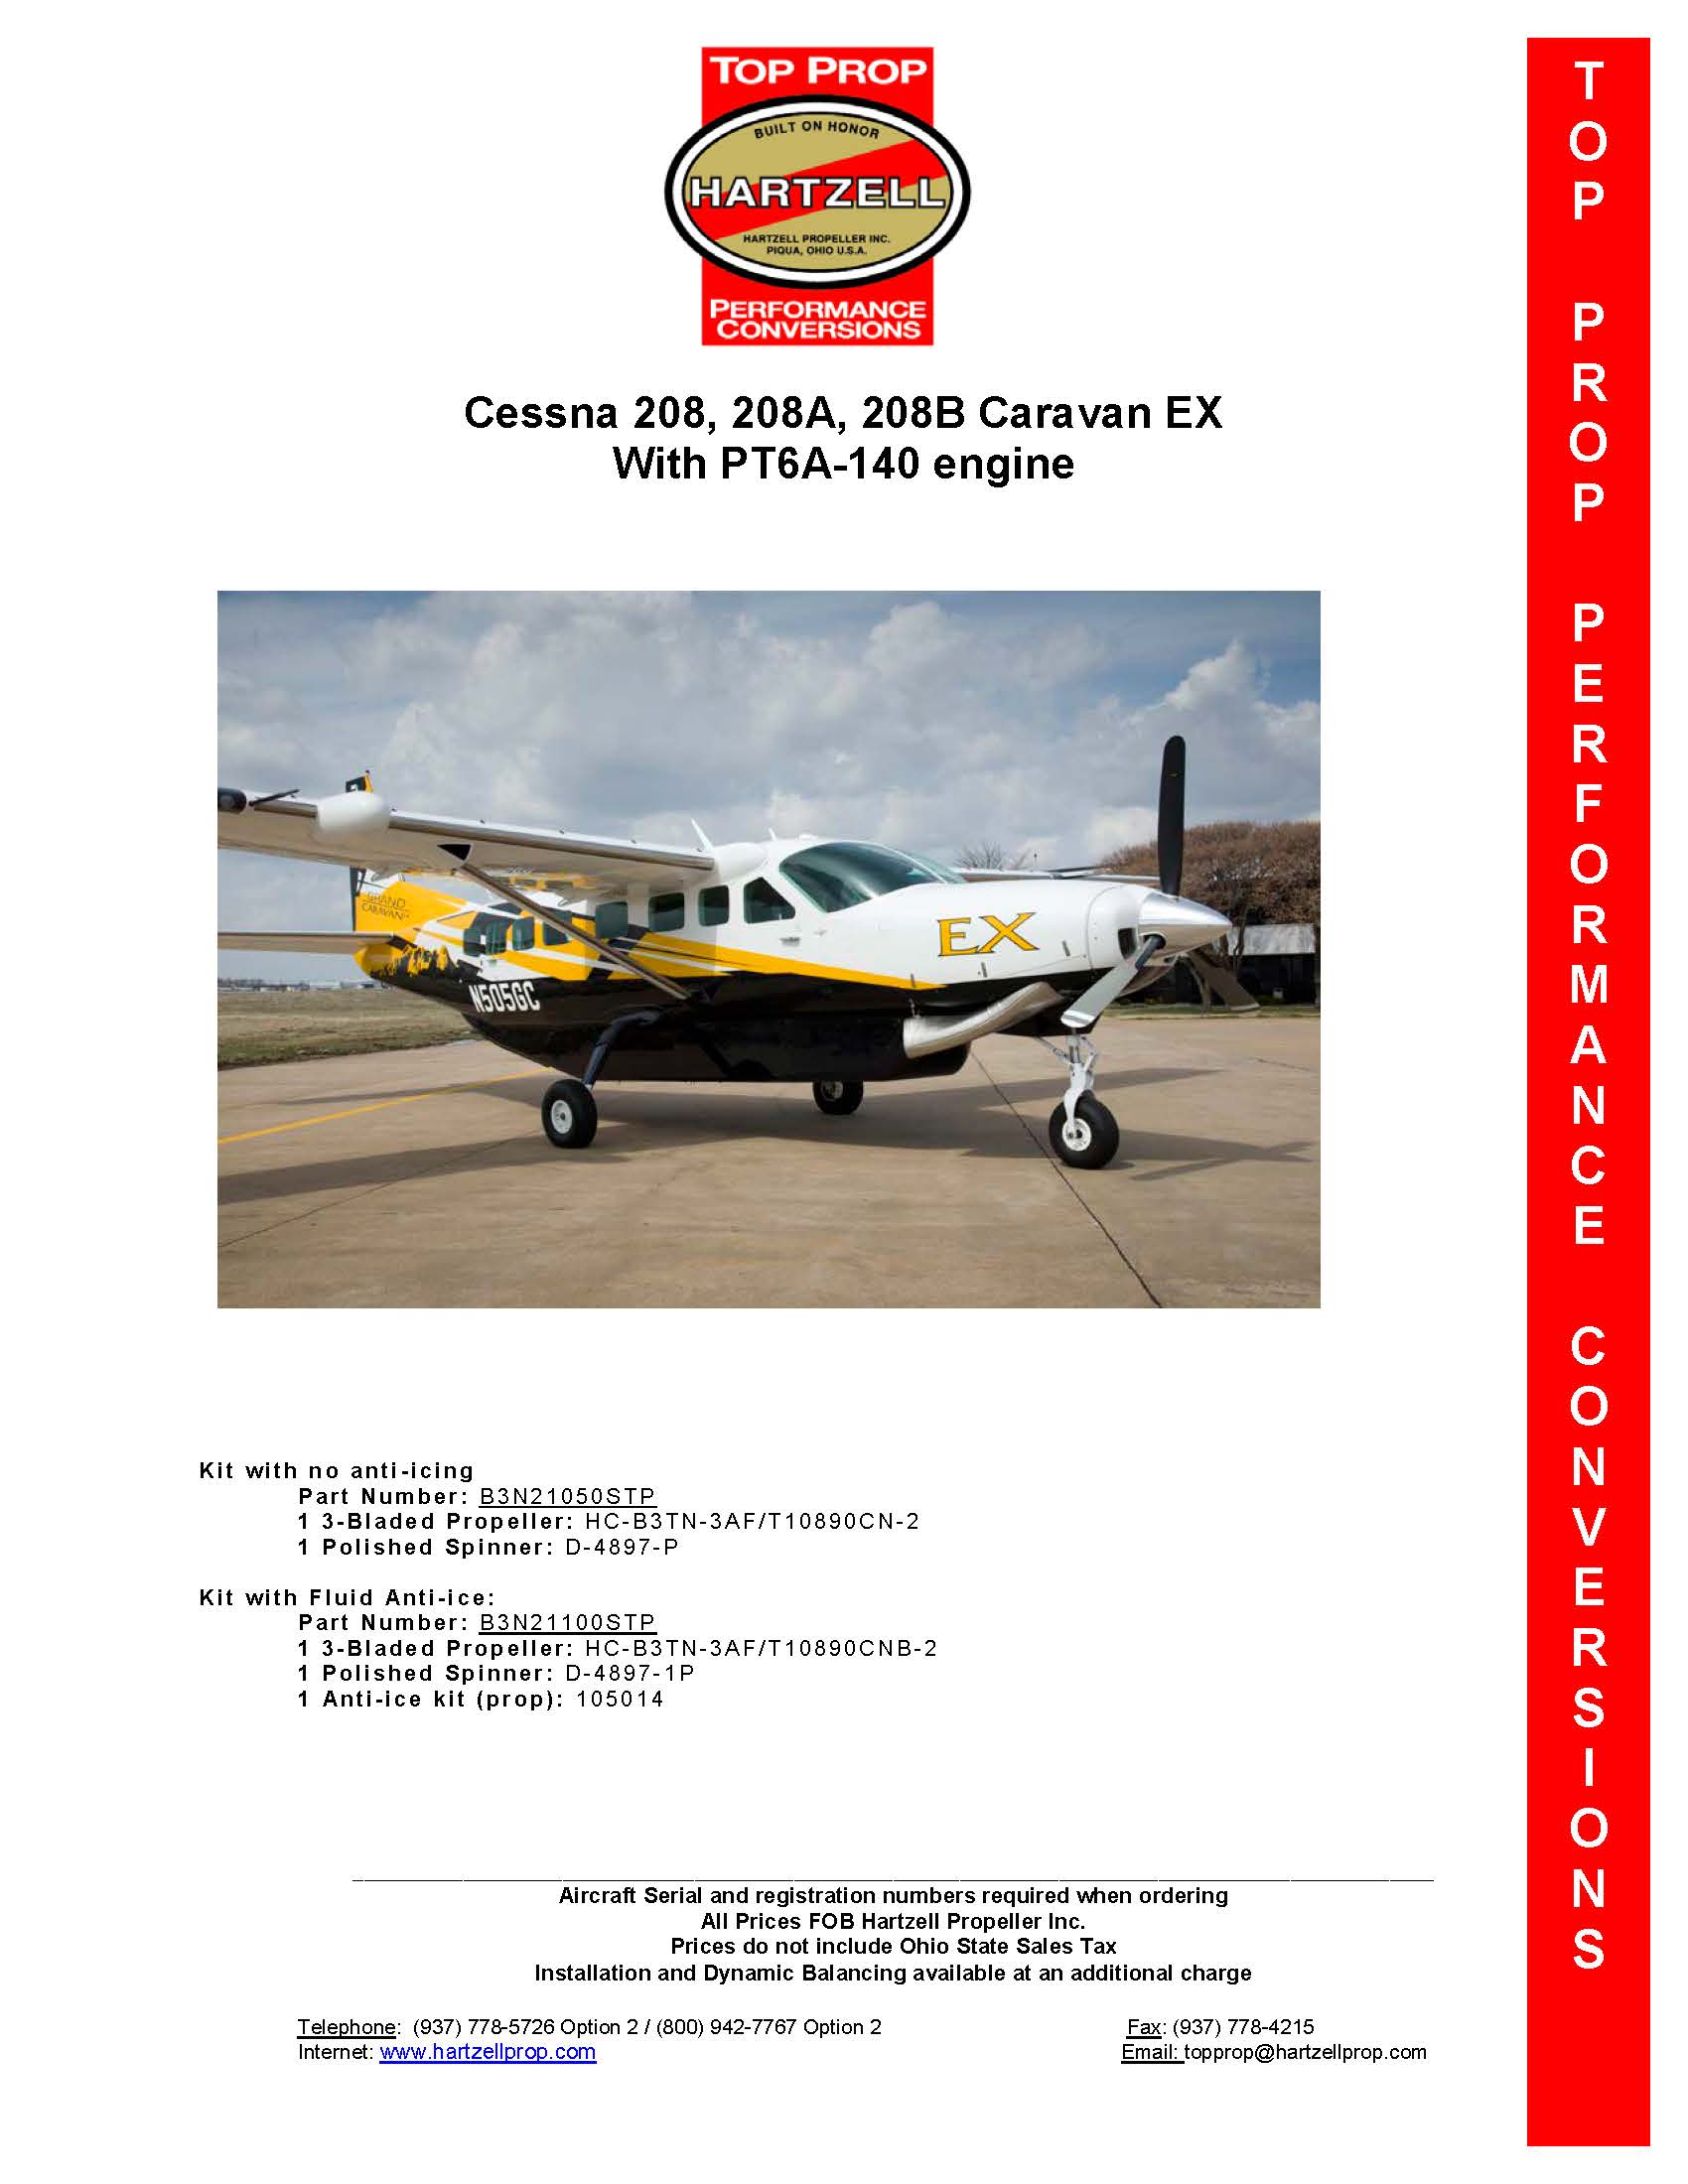 CESSNA-208-B3N21050STP-B3N21100STP-PAGE-1